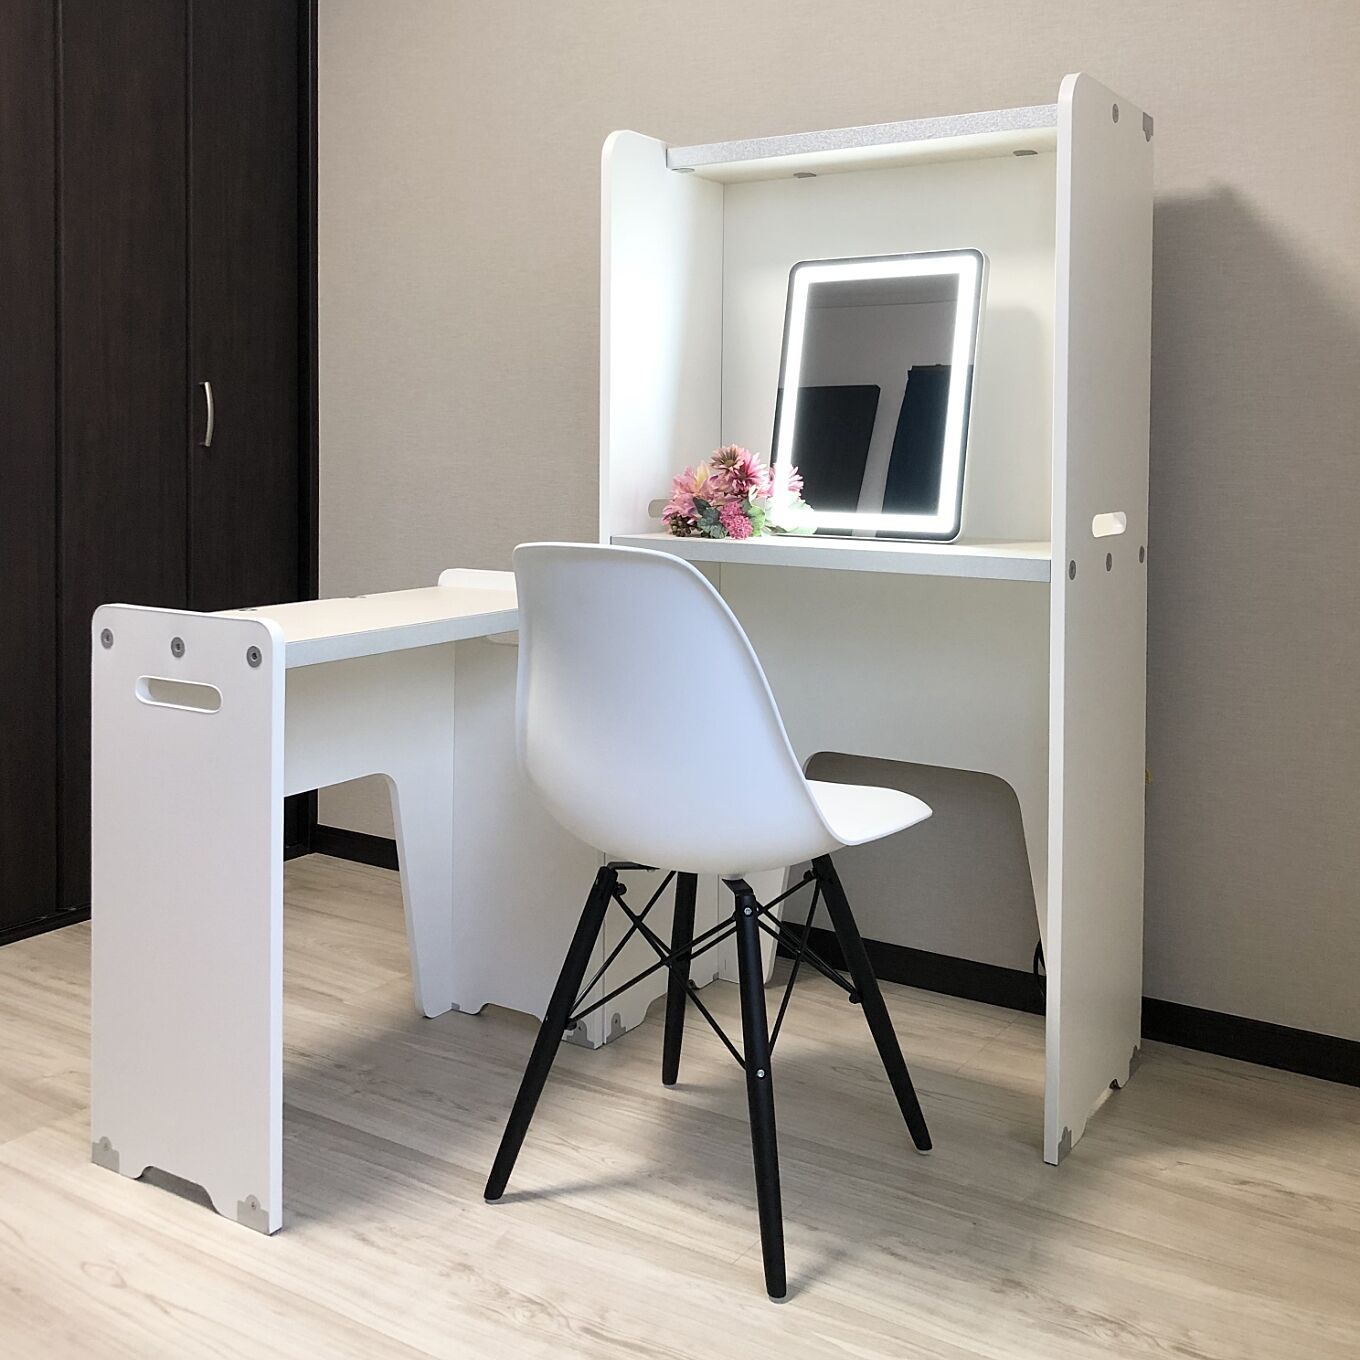 「LED Smart mirror」「Smart Desk +」